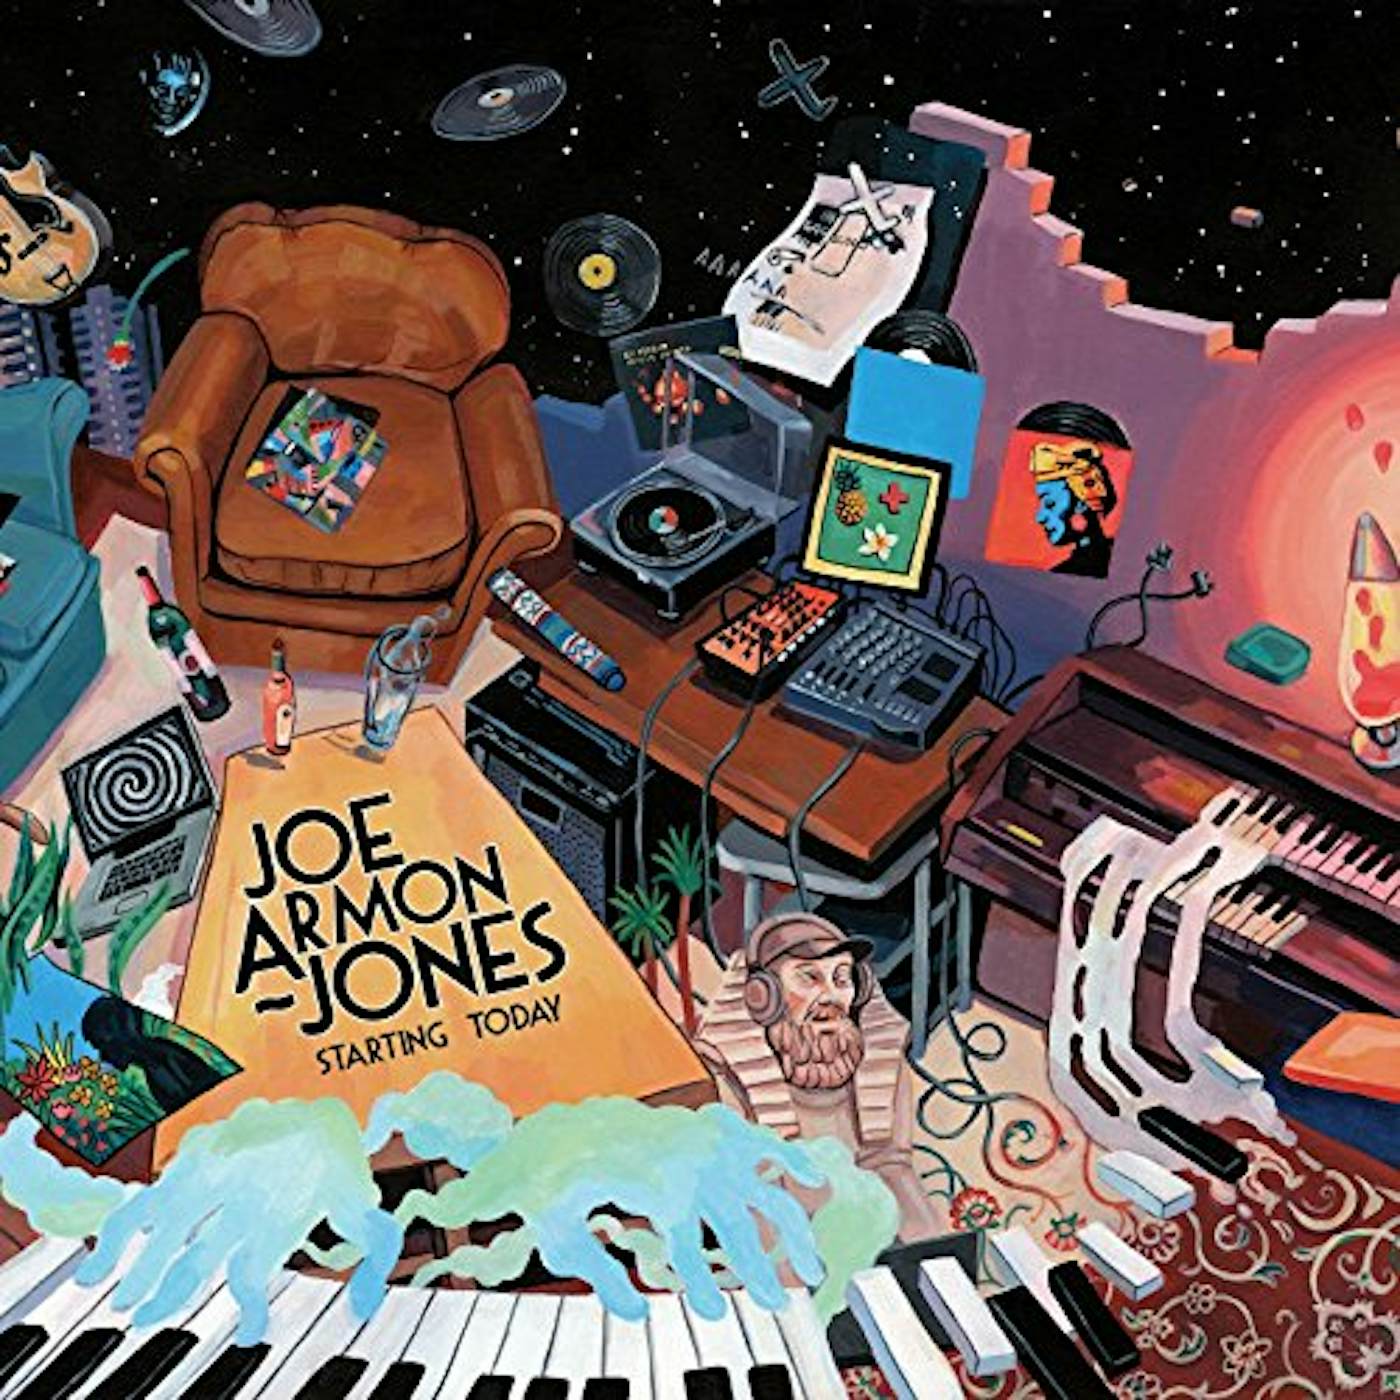 Joe Armon-Jones STARTING TODAY CD